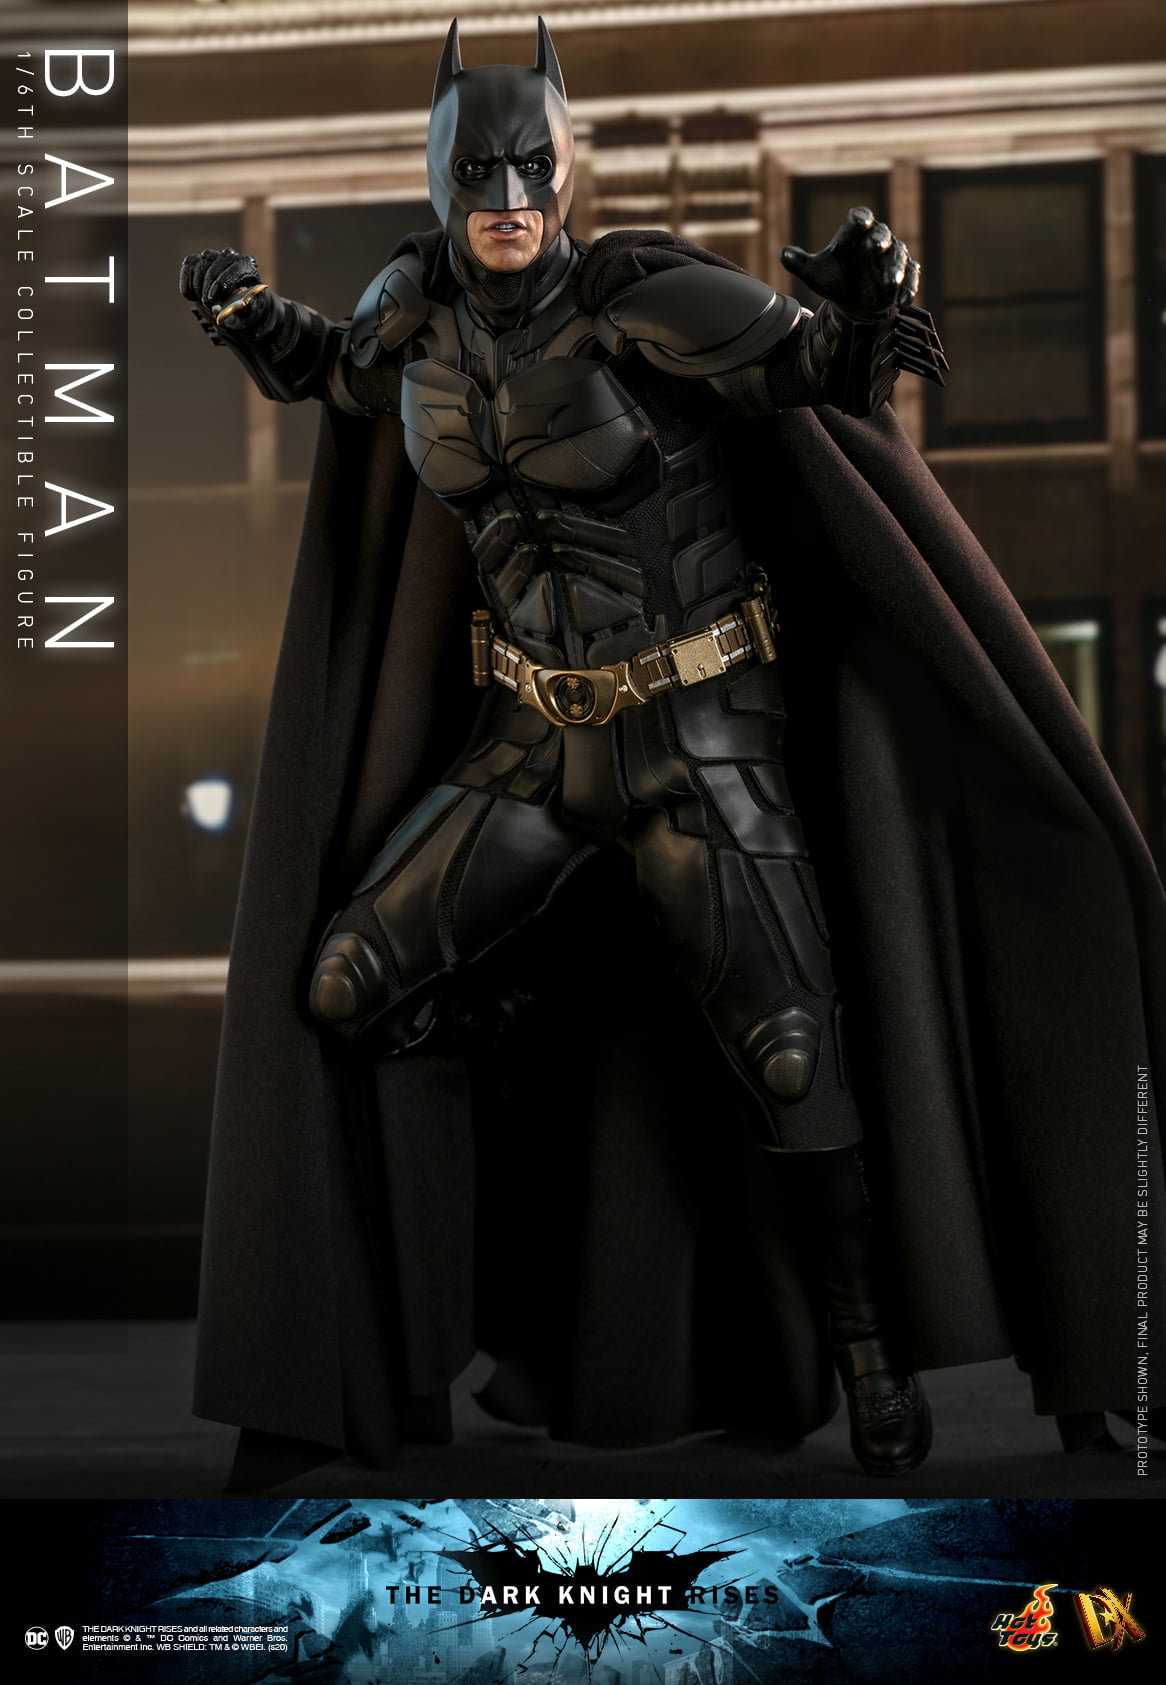 Hot Toys DX19 1/6 The Dark Knight Rises - Batman